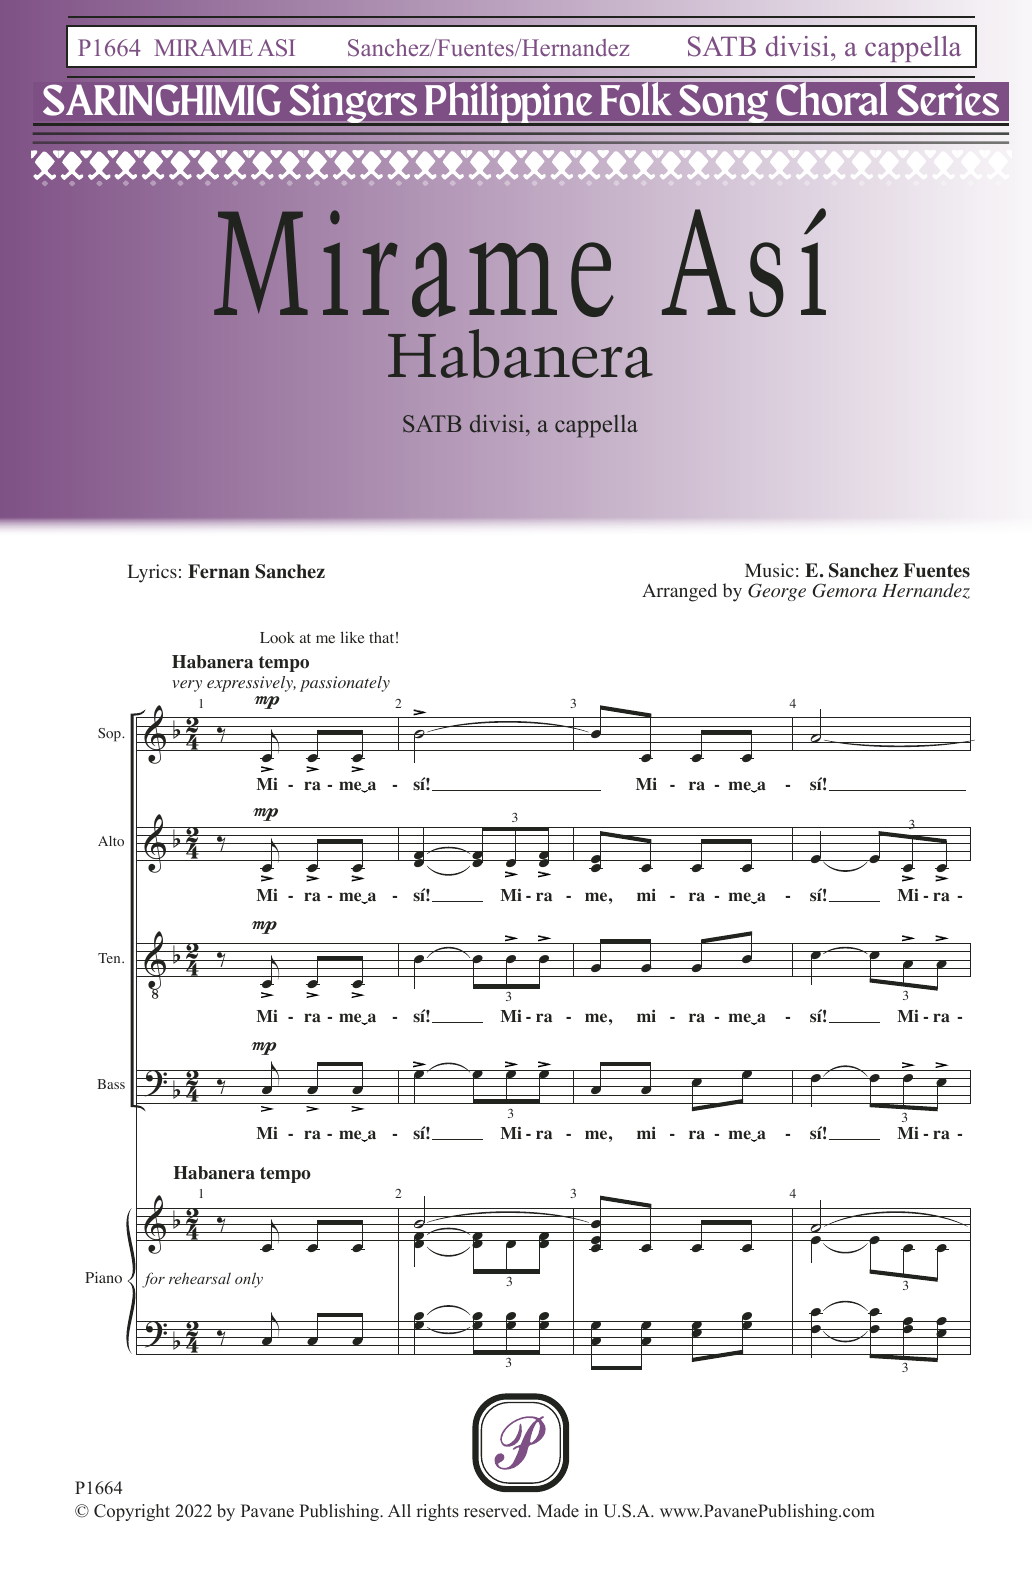 Fernan Sanchez and E. Sanchez Fuentes Mirame Así (Habanera) (arr. George Gemora Hernandez) Sheet Music Notes & Chords for SATB Choir - Download or Print PDF